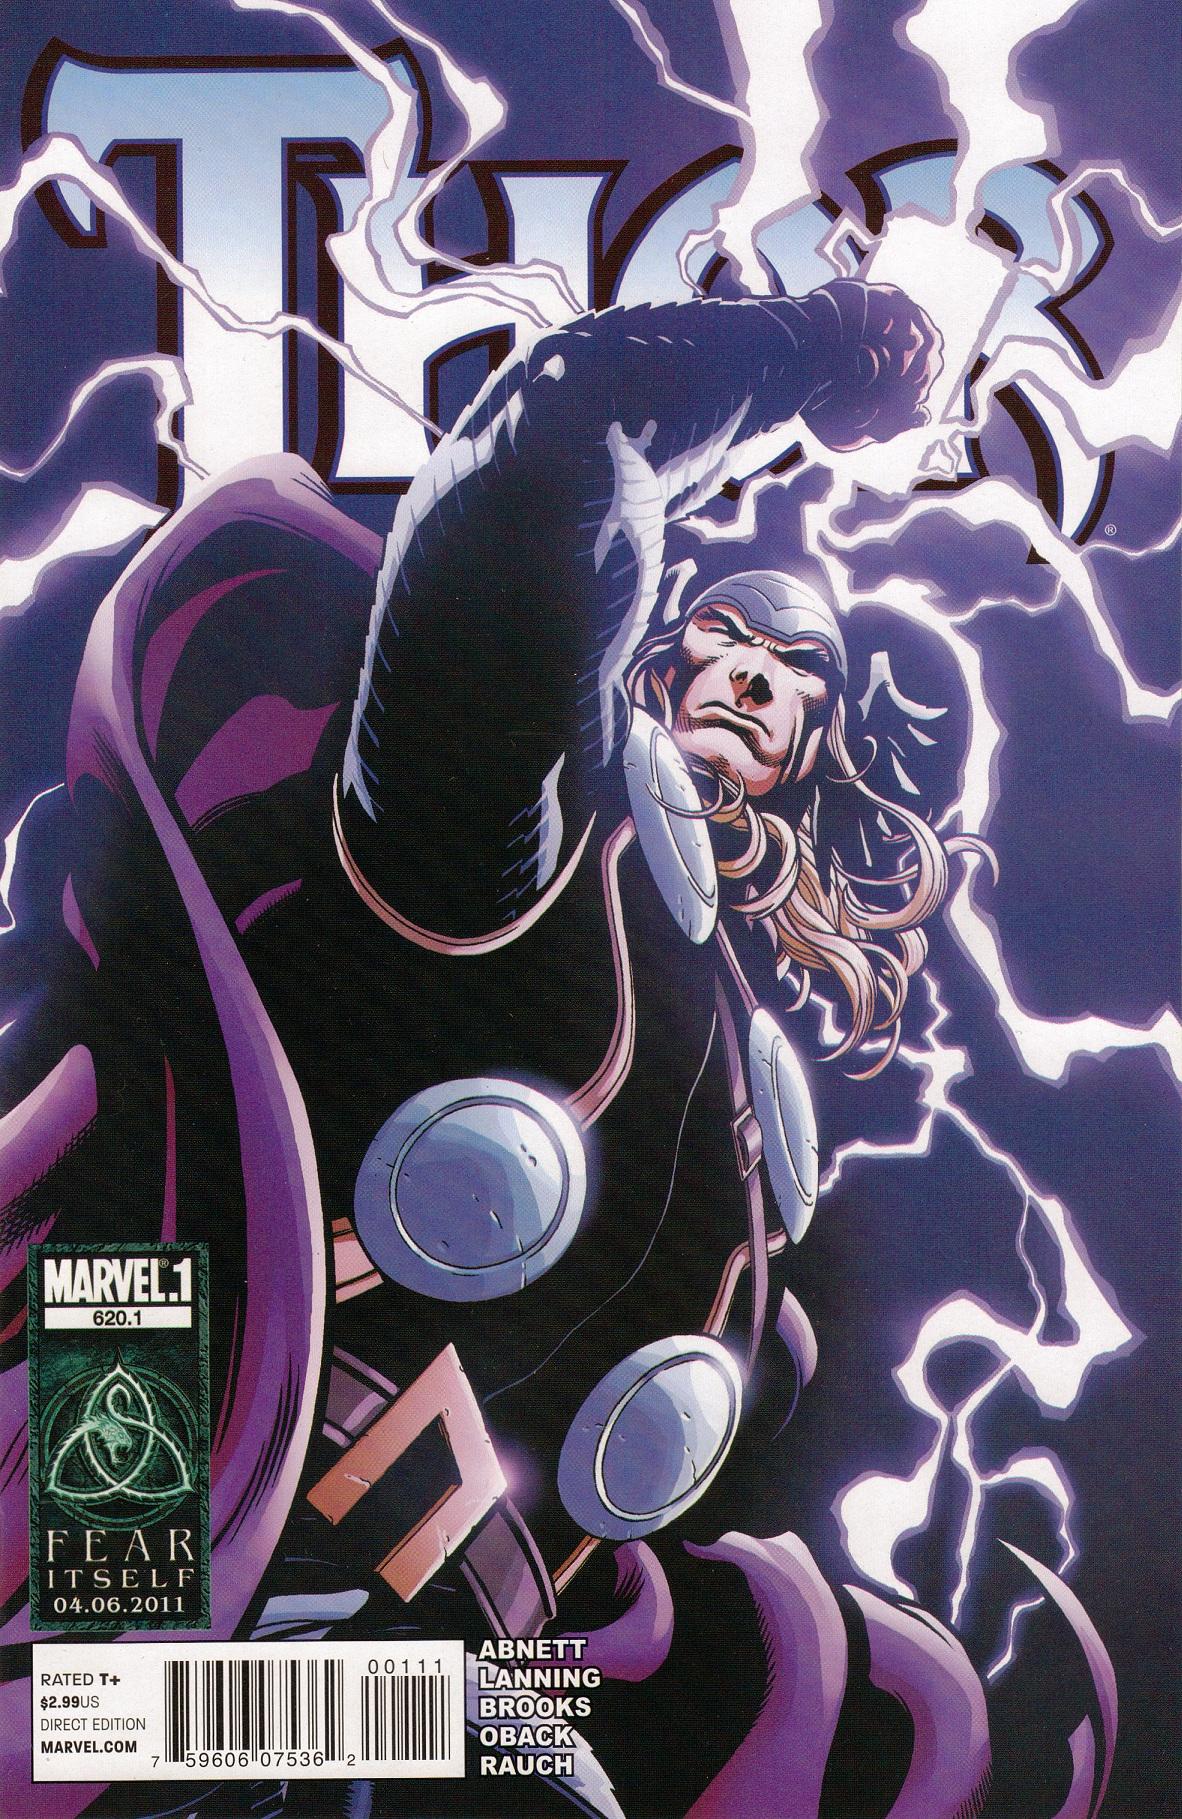 Thor Vol. 1 #620.1